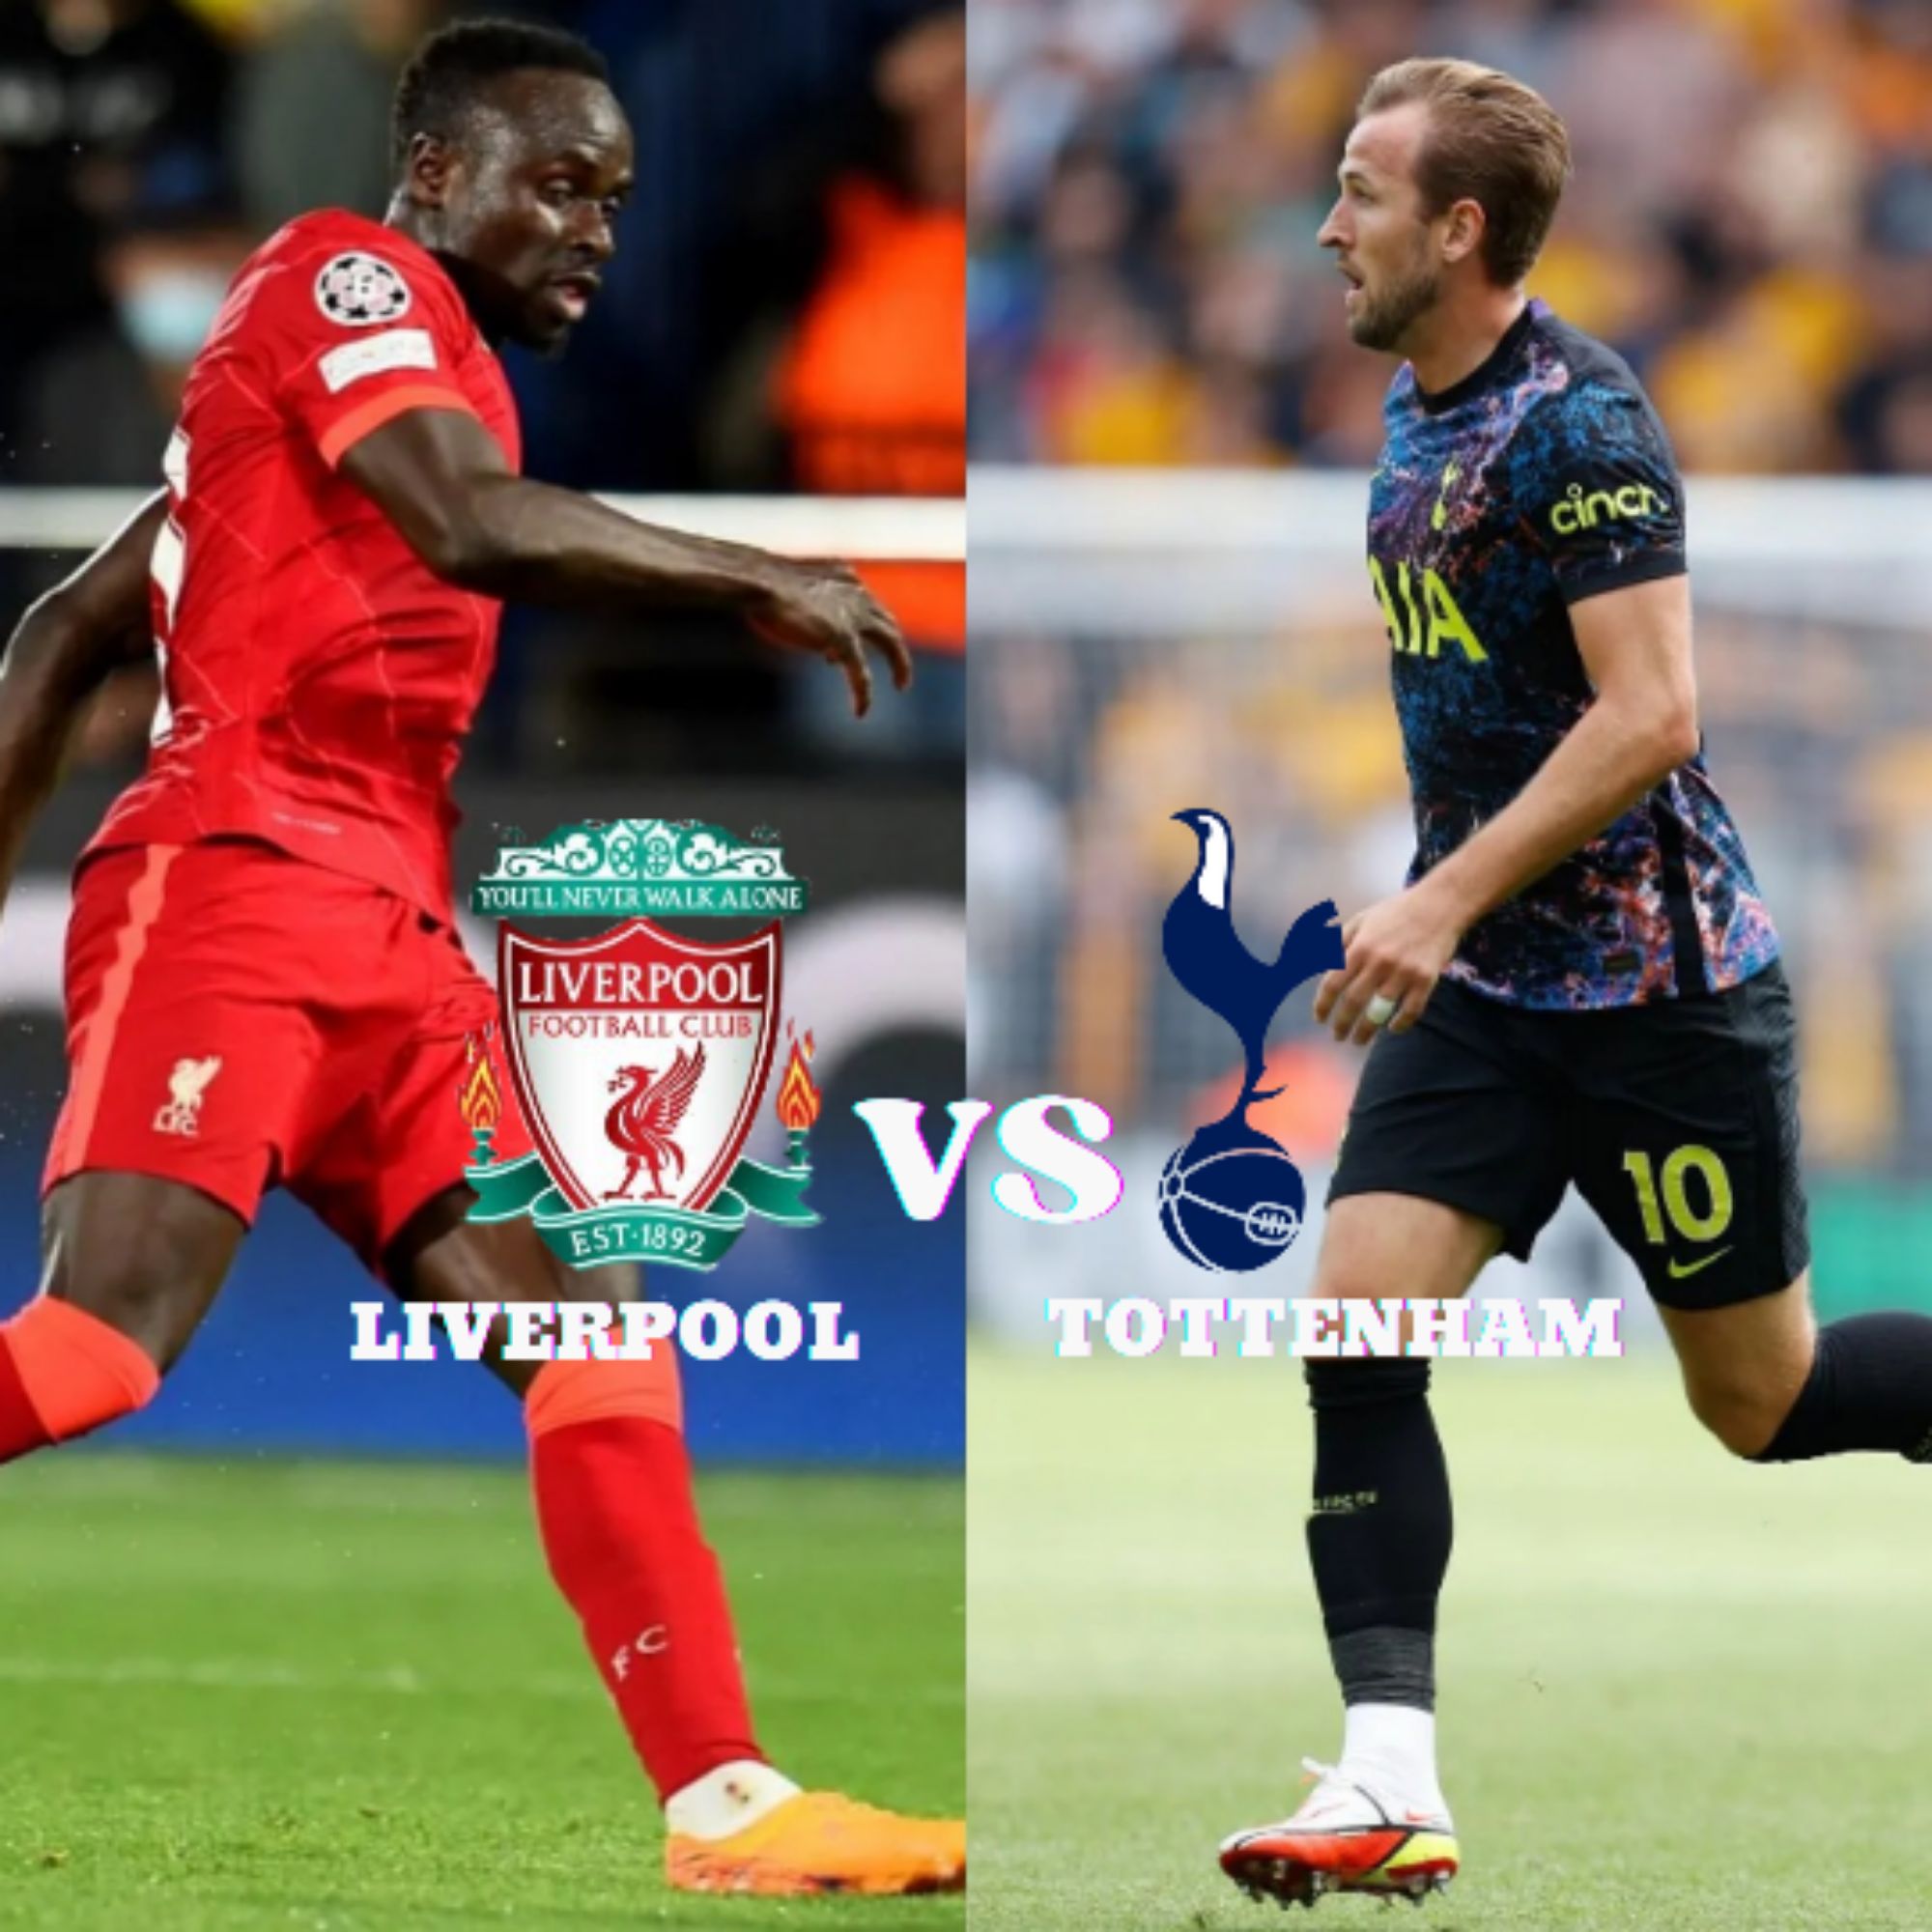 Liverpool vs Tottenham – Preview And Predictions